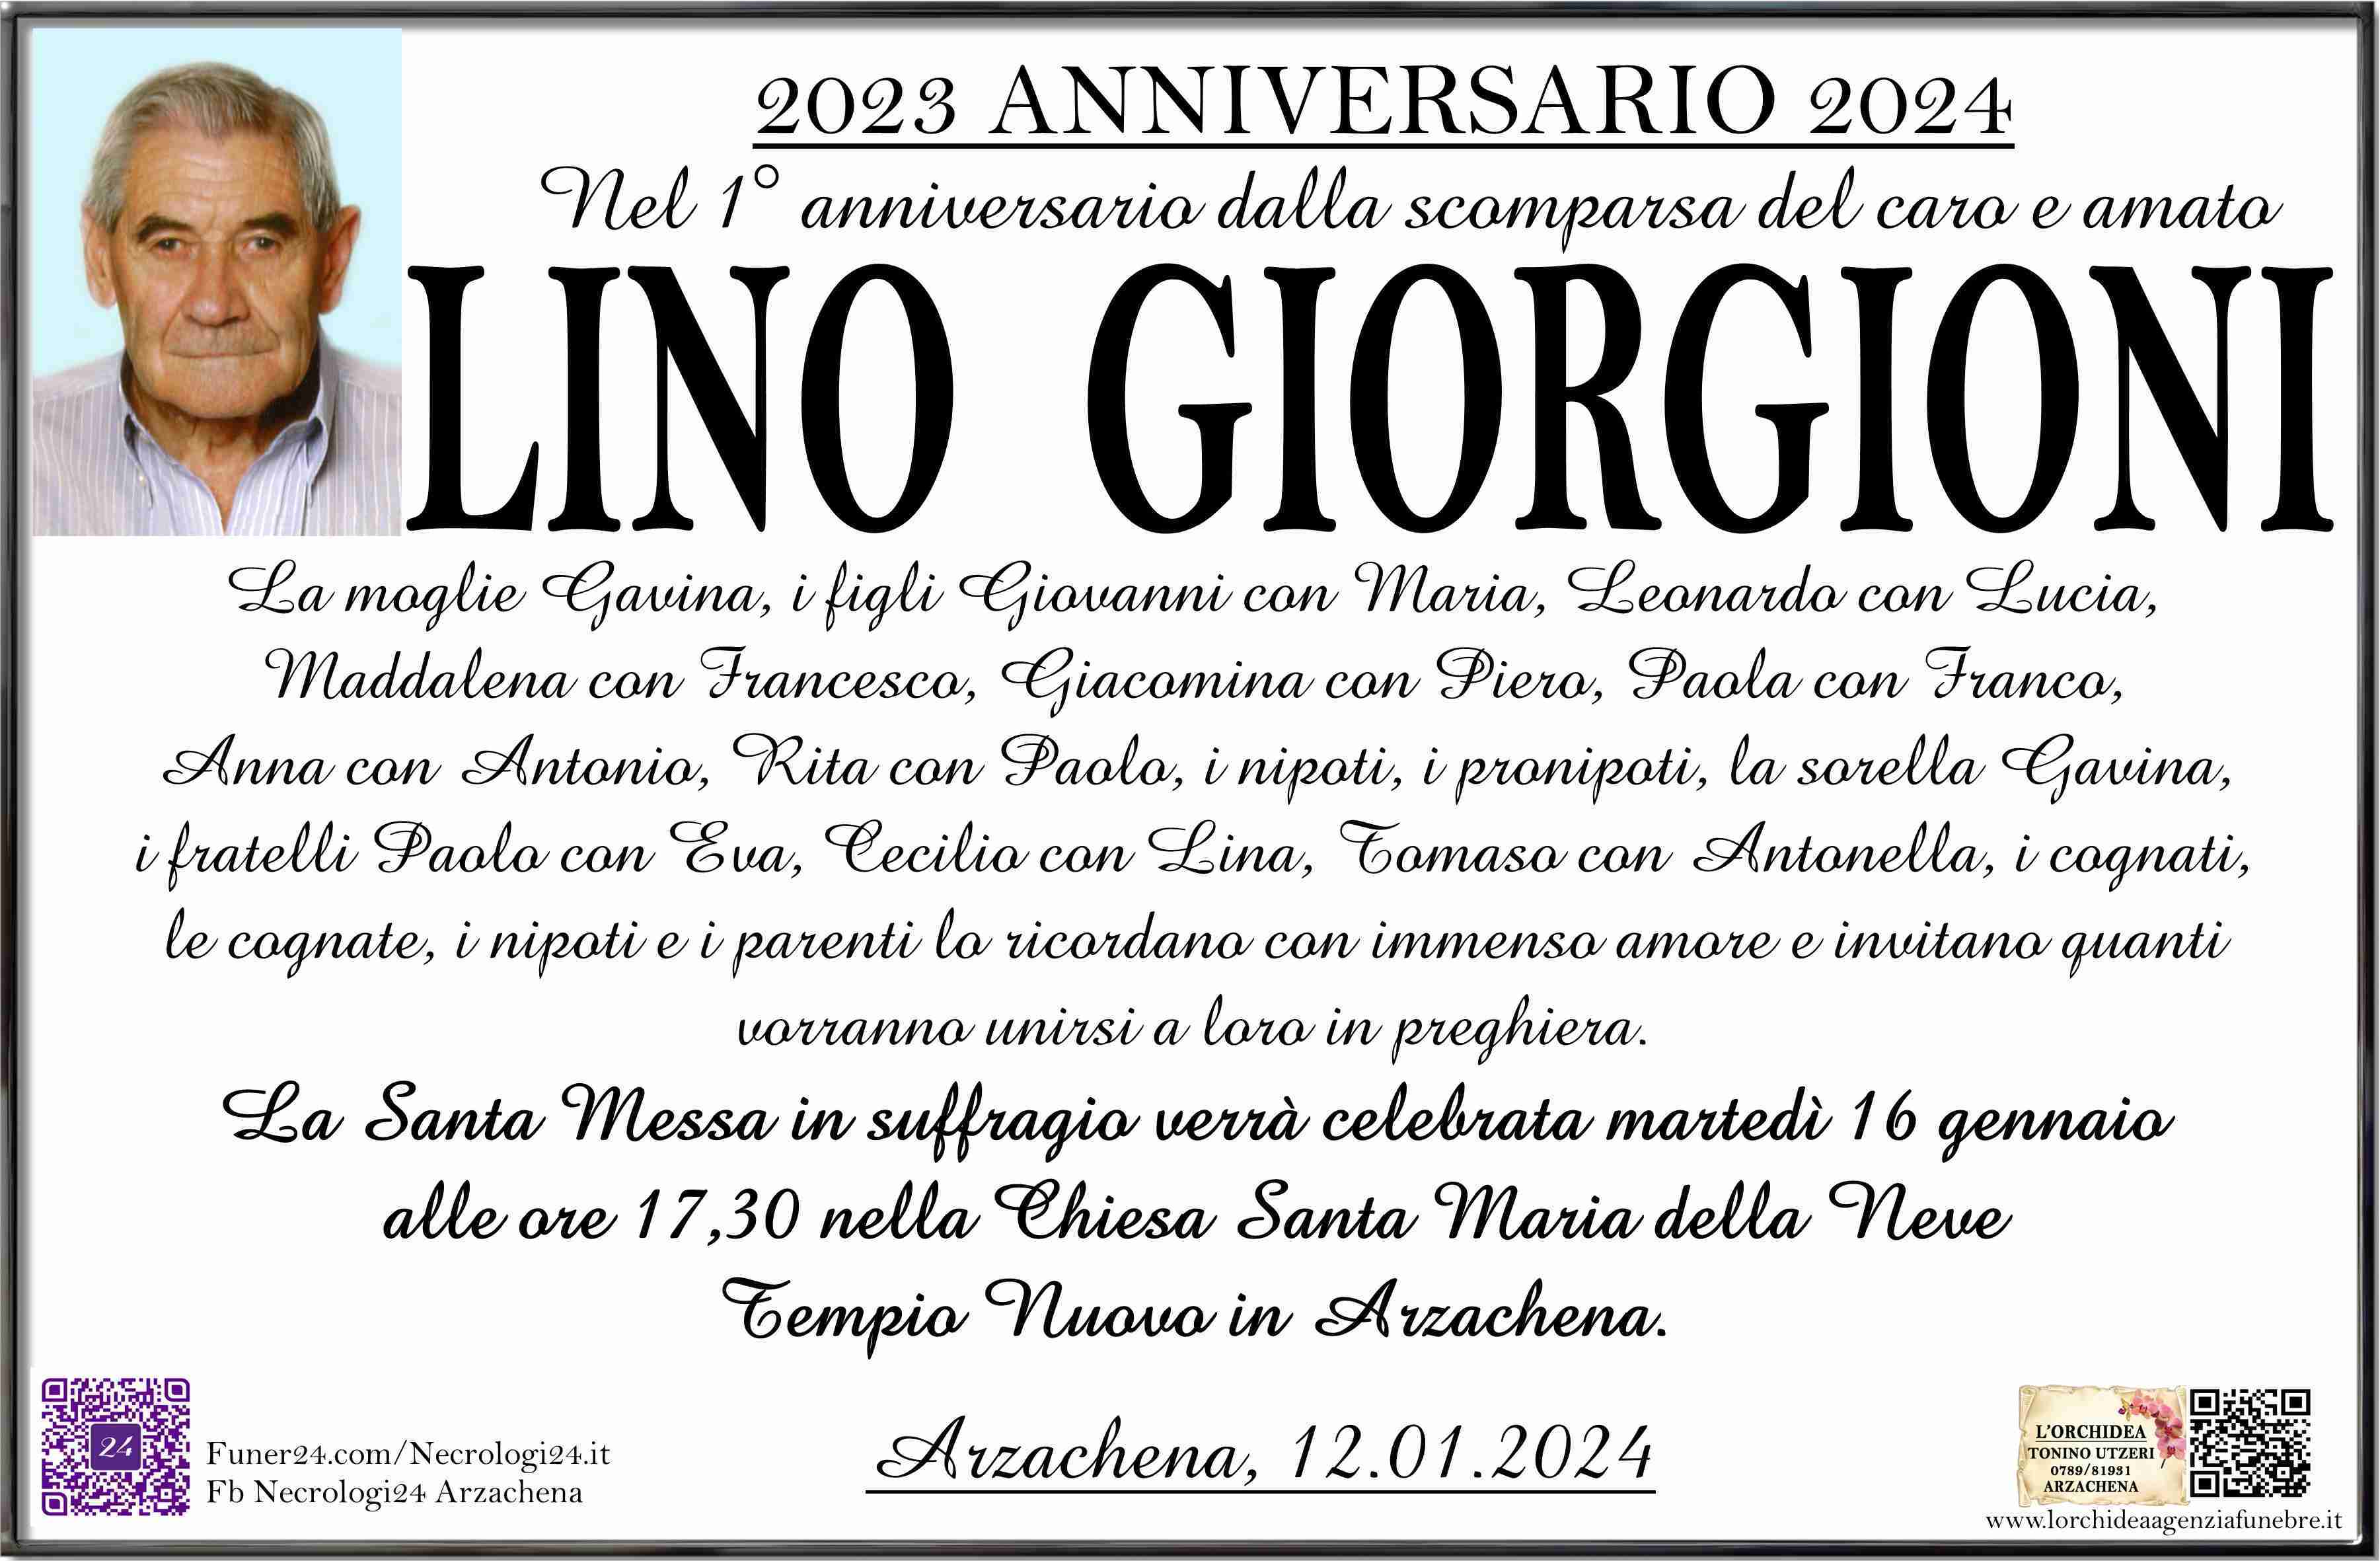 Lino Giorgioni